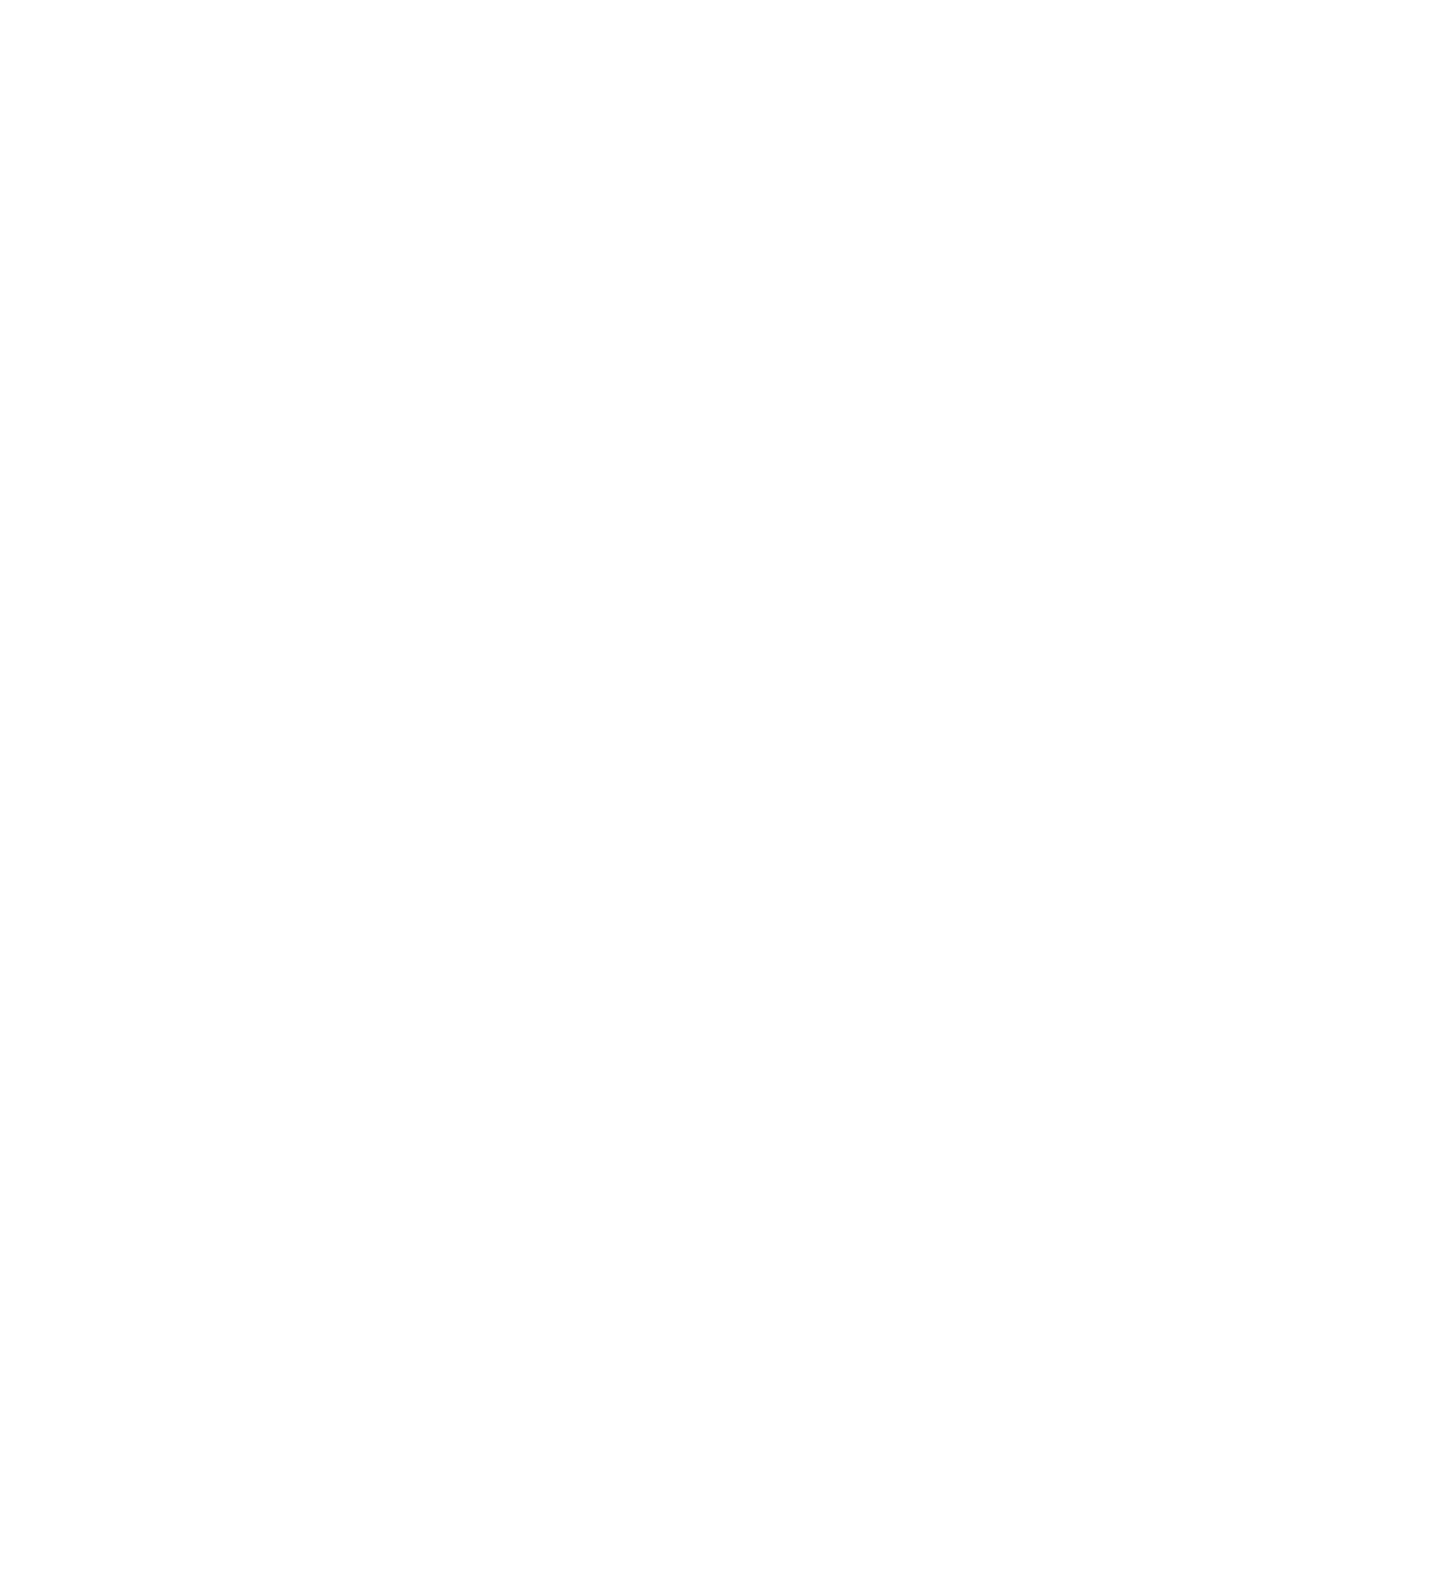 Satsuma Pharmaceuticals logo for dark backgrounds (transparent PNG)